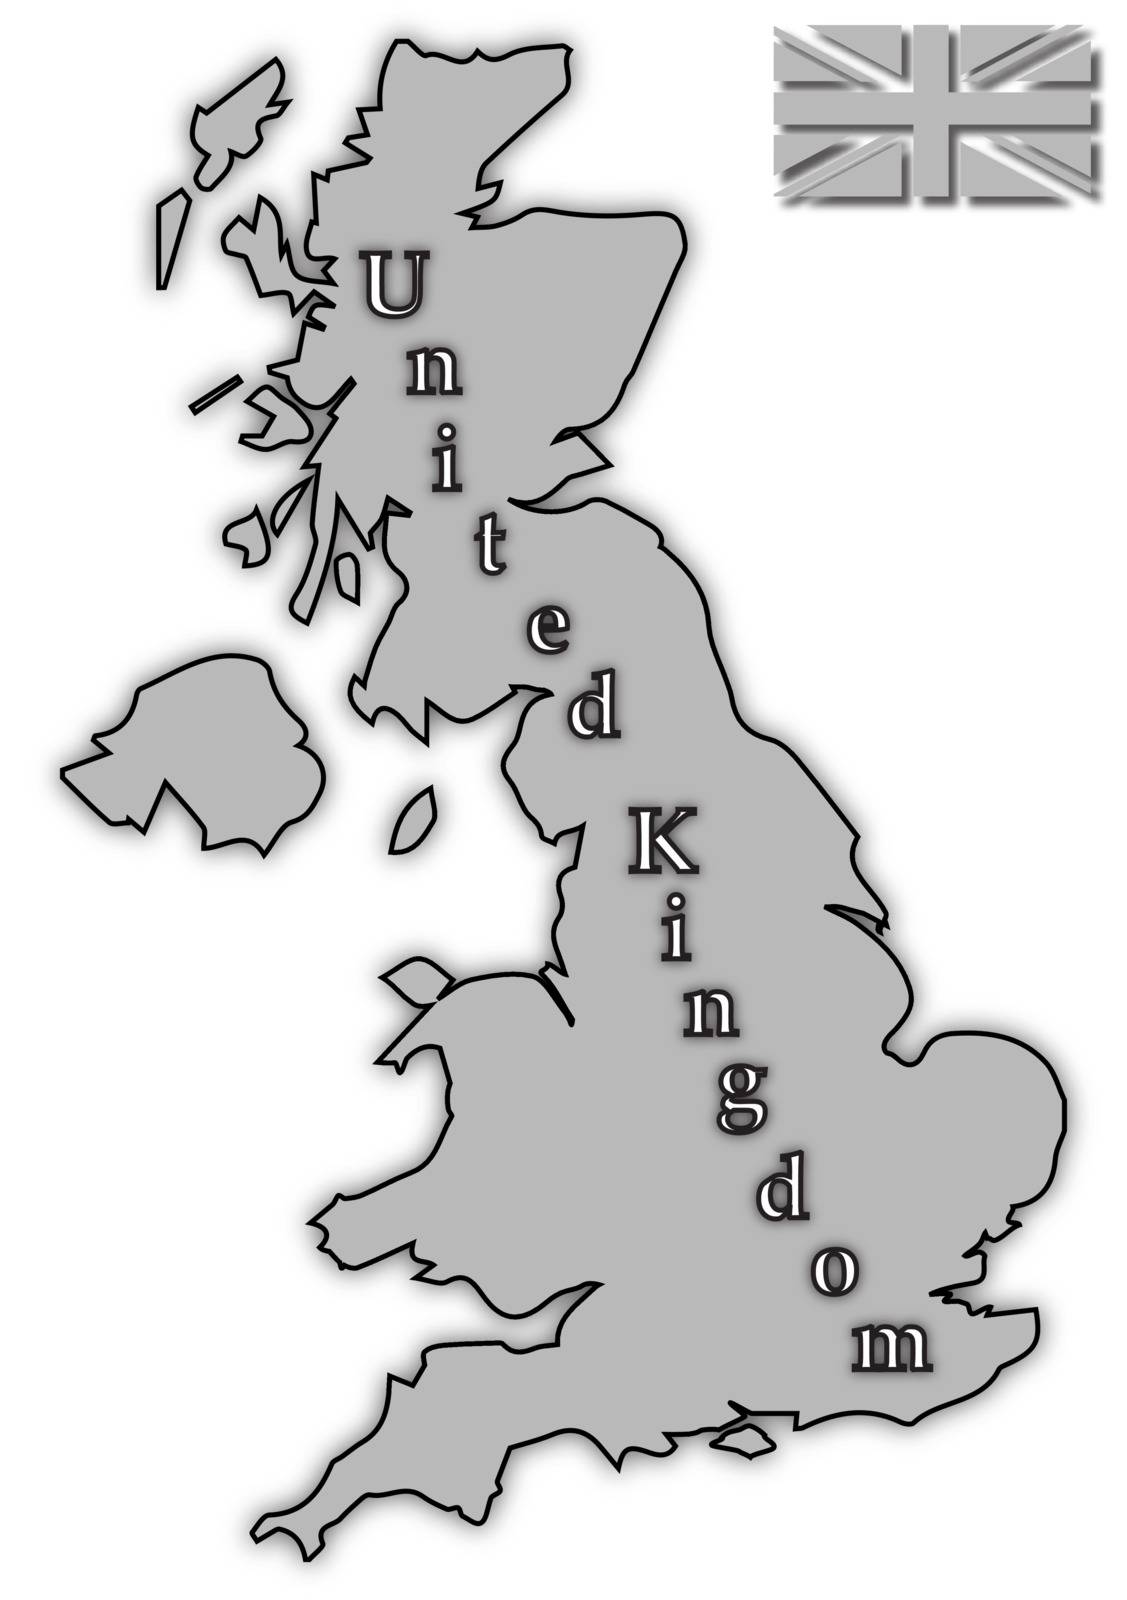 Grey UK Map With Grey Flag by DavidScar